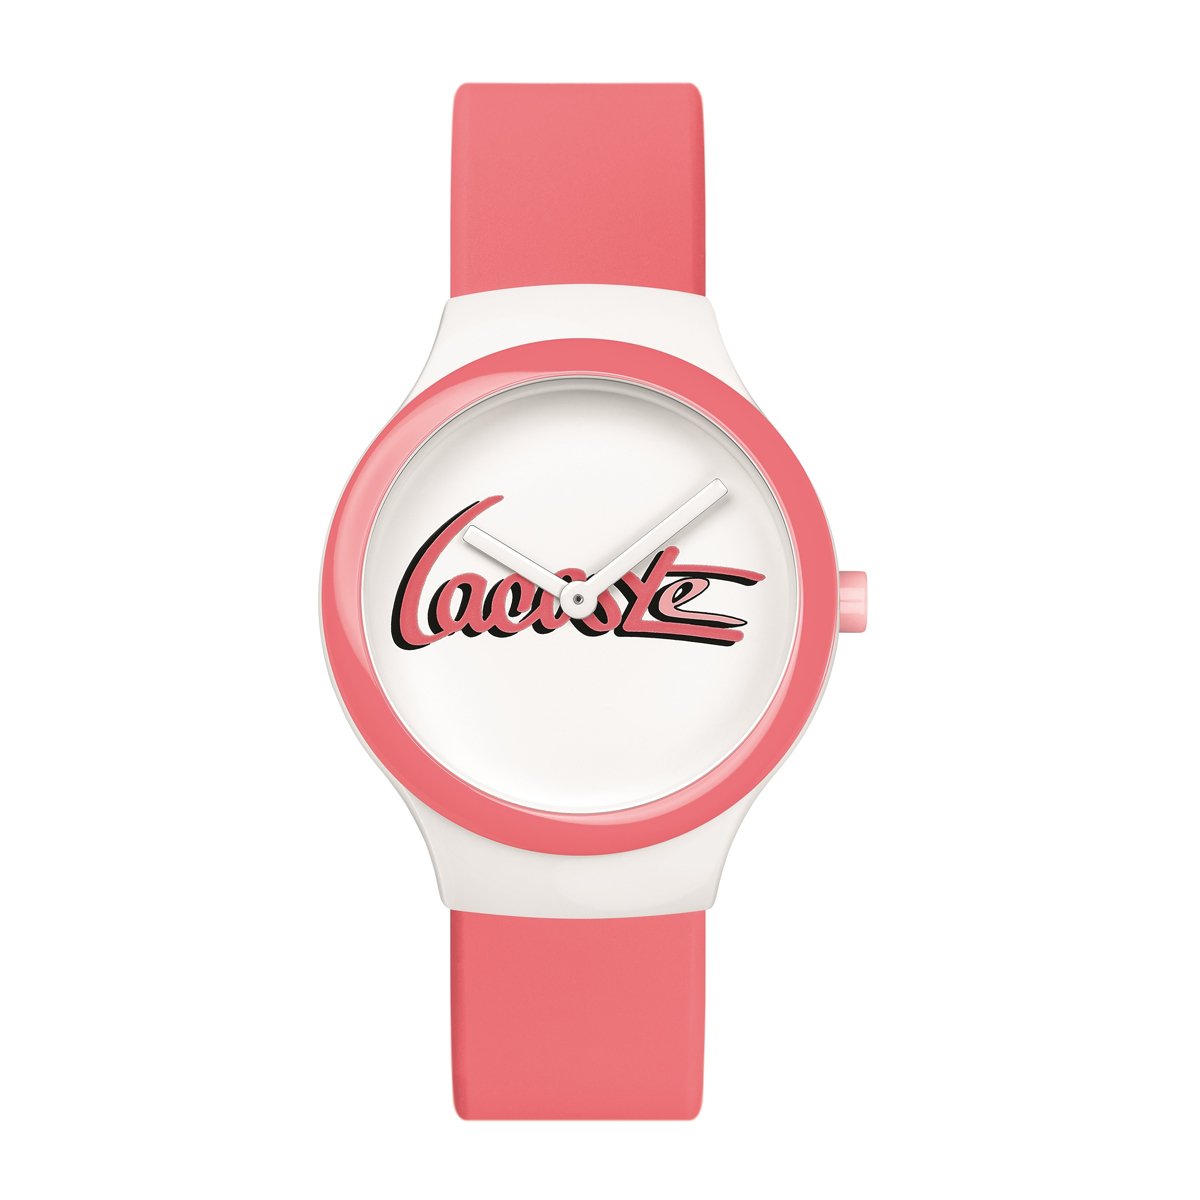 Reloj deportivo Goa Lacoste rosa unisex 2020131